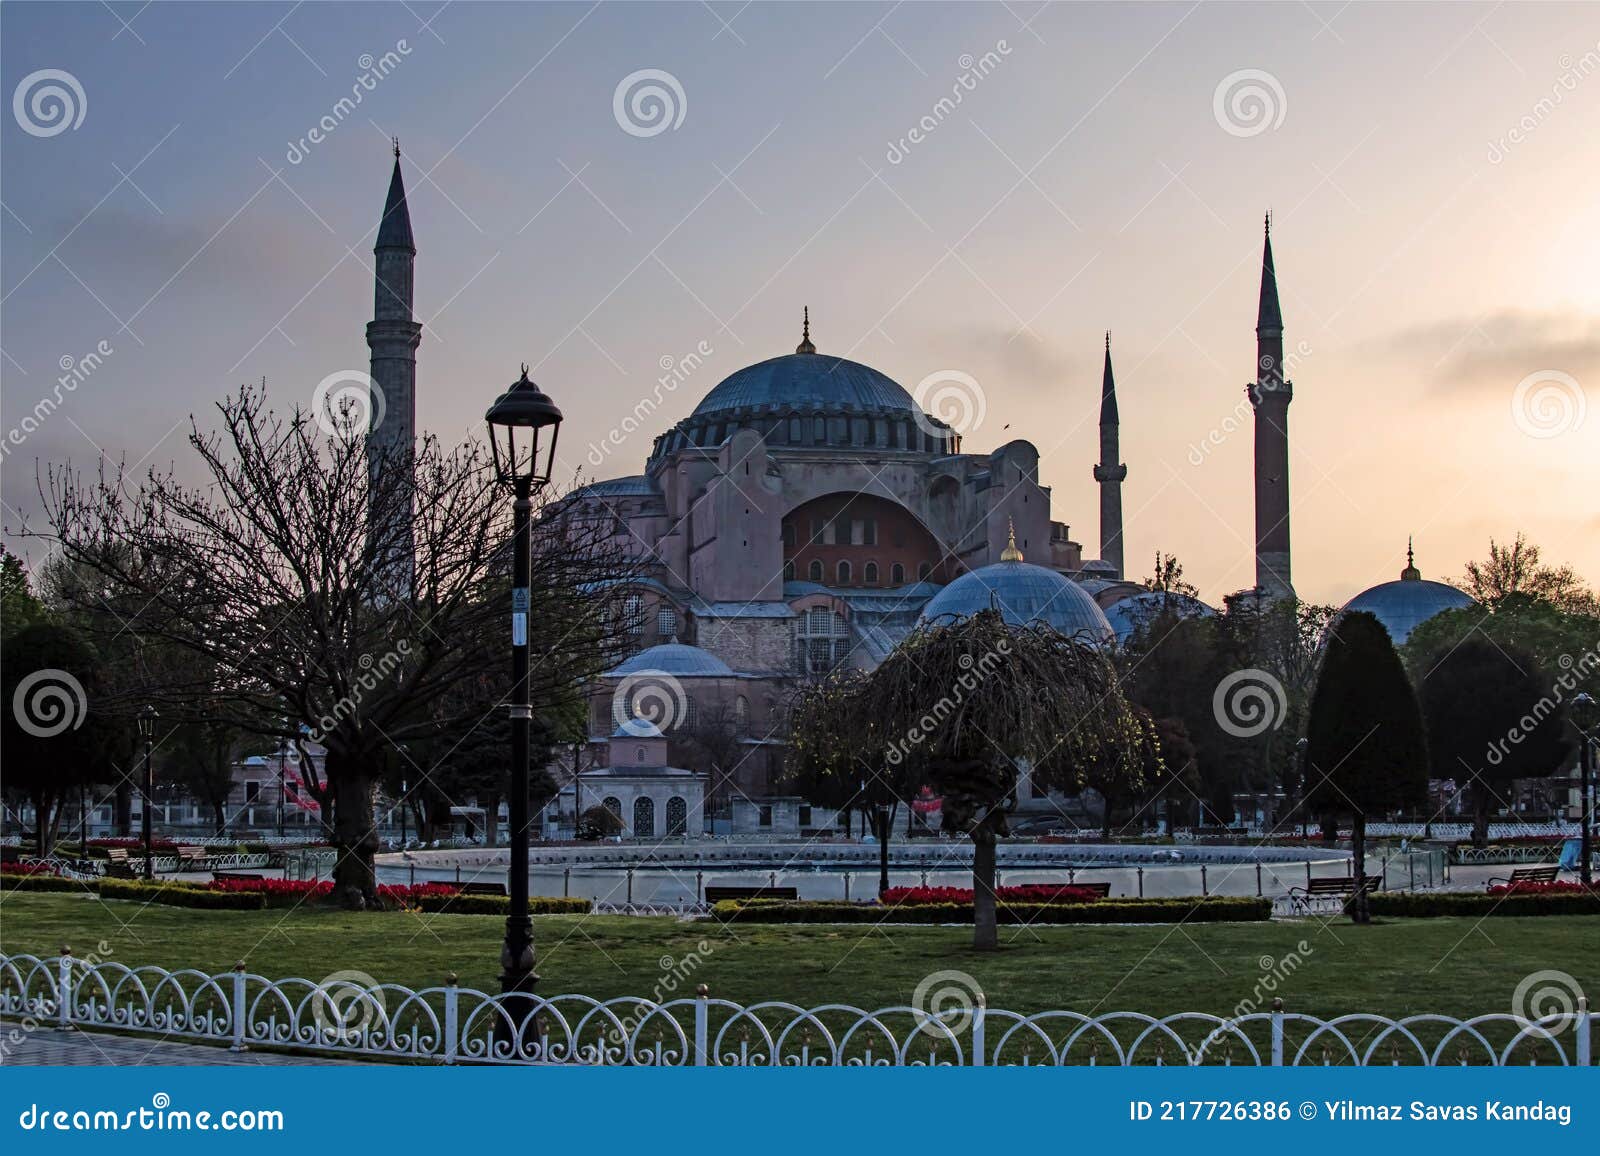 my dream city istanbul essay